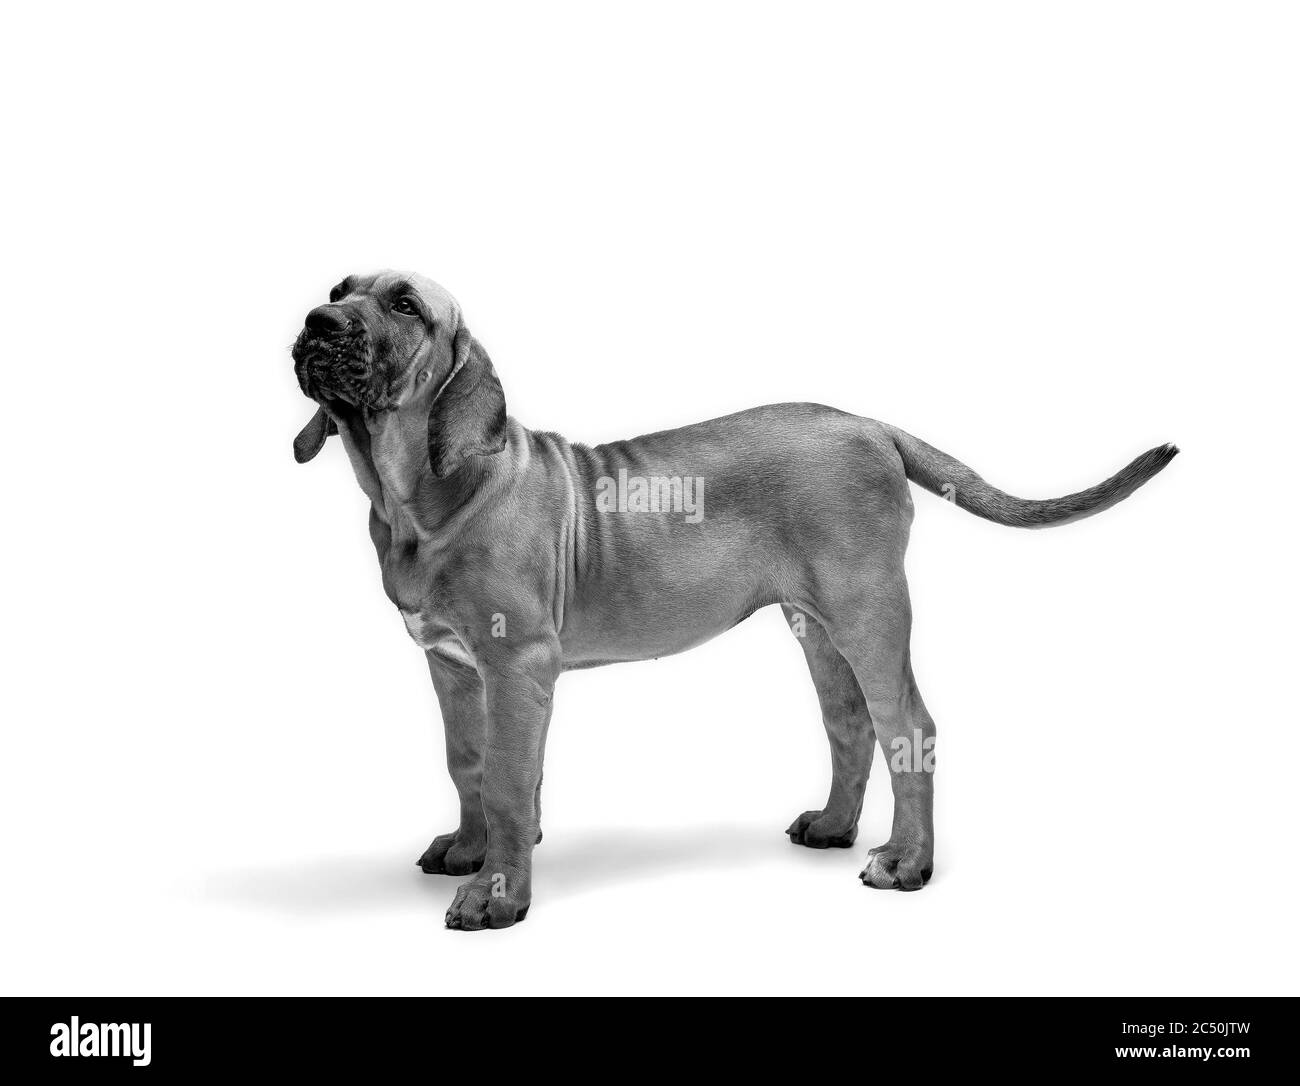 https://c8.alamy.com/comp/2C50JTW/mastiff-puppy-brazilian-mastiff-also-known-as-fila-brasileiro-puppy-on-white-background-2C50JTW.jpg